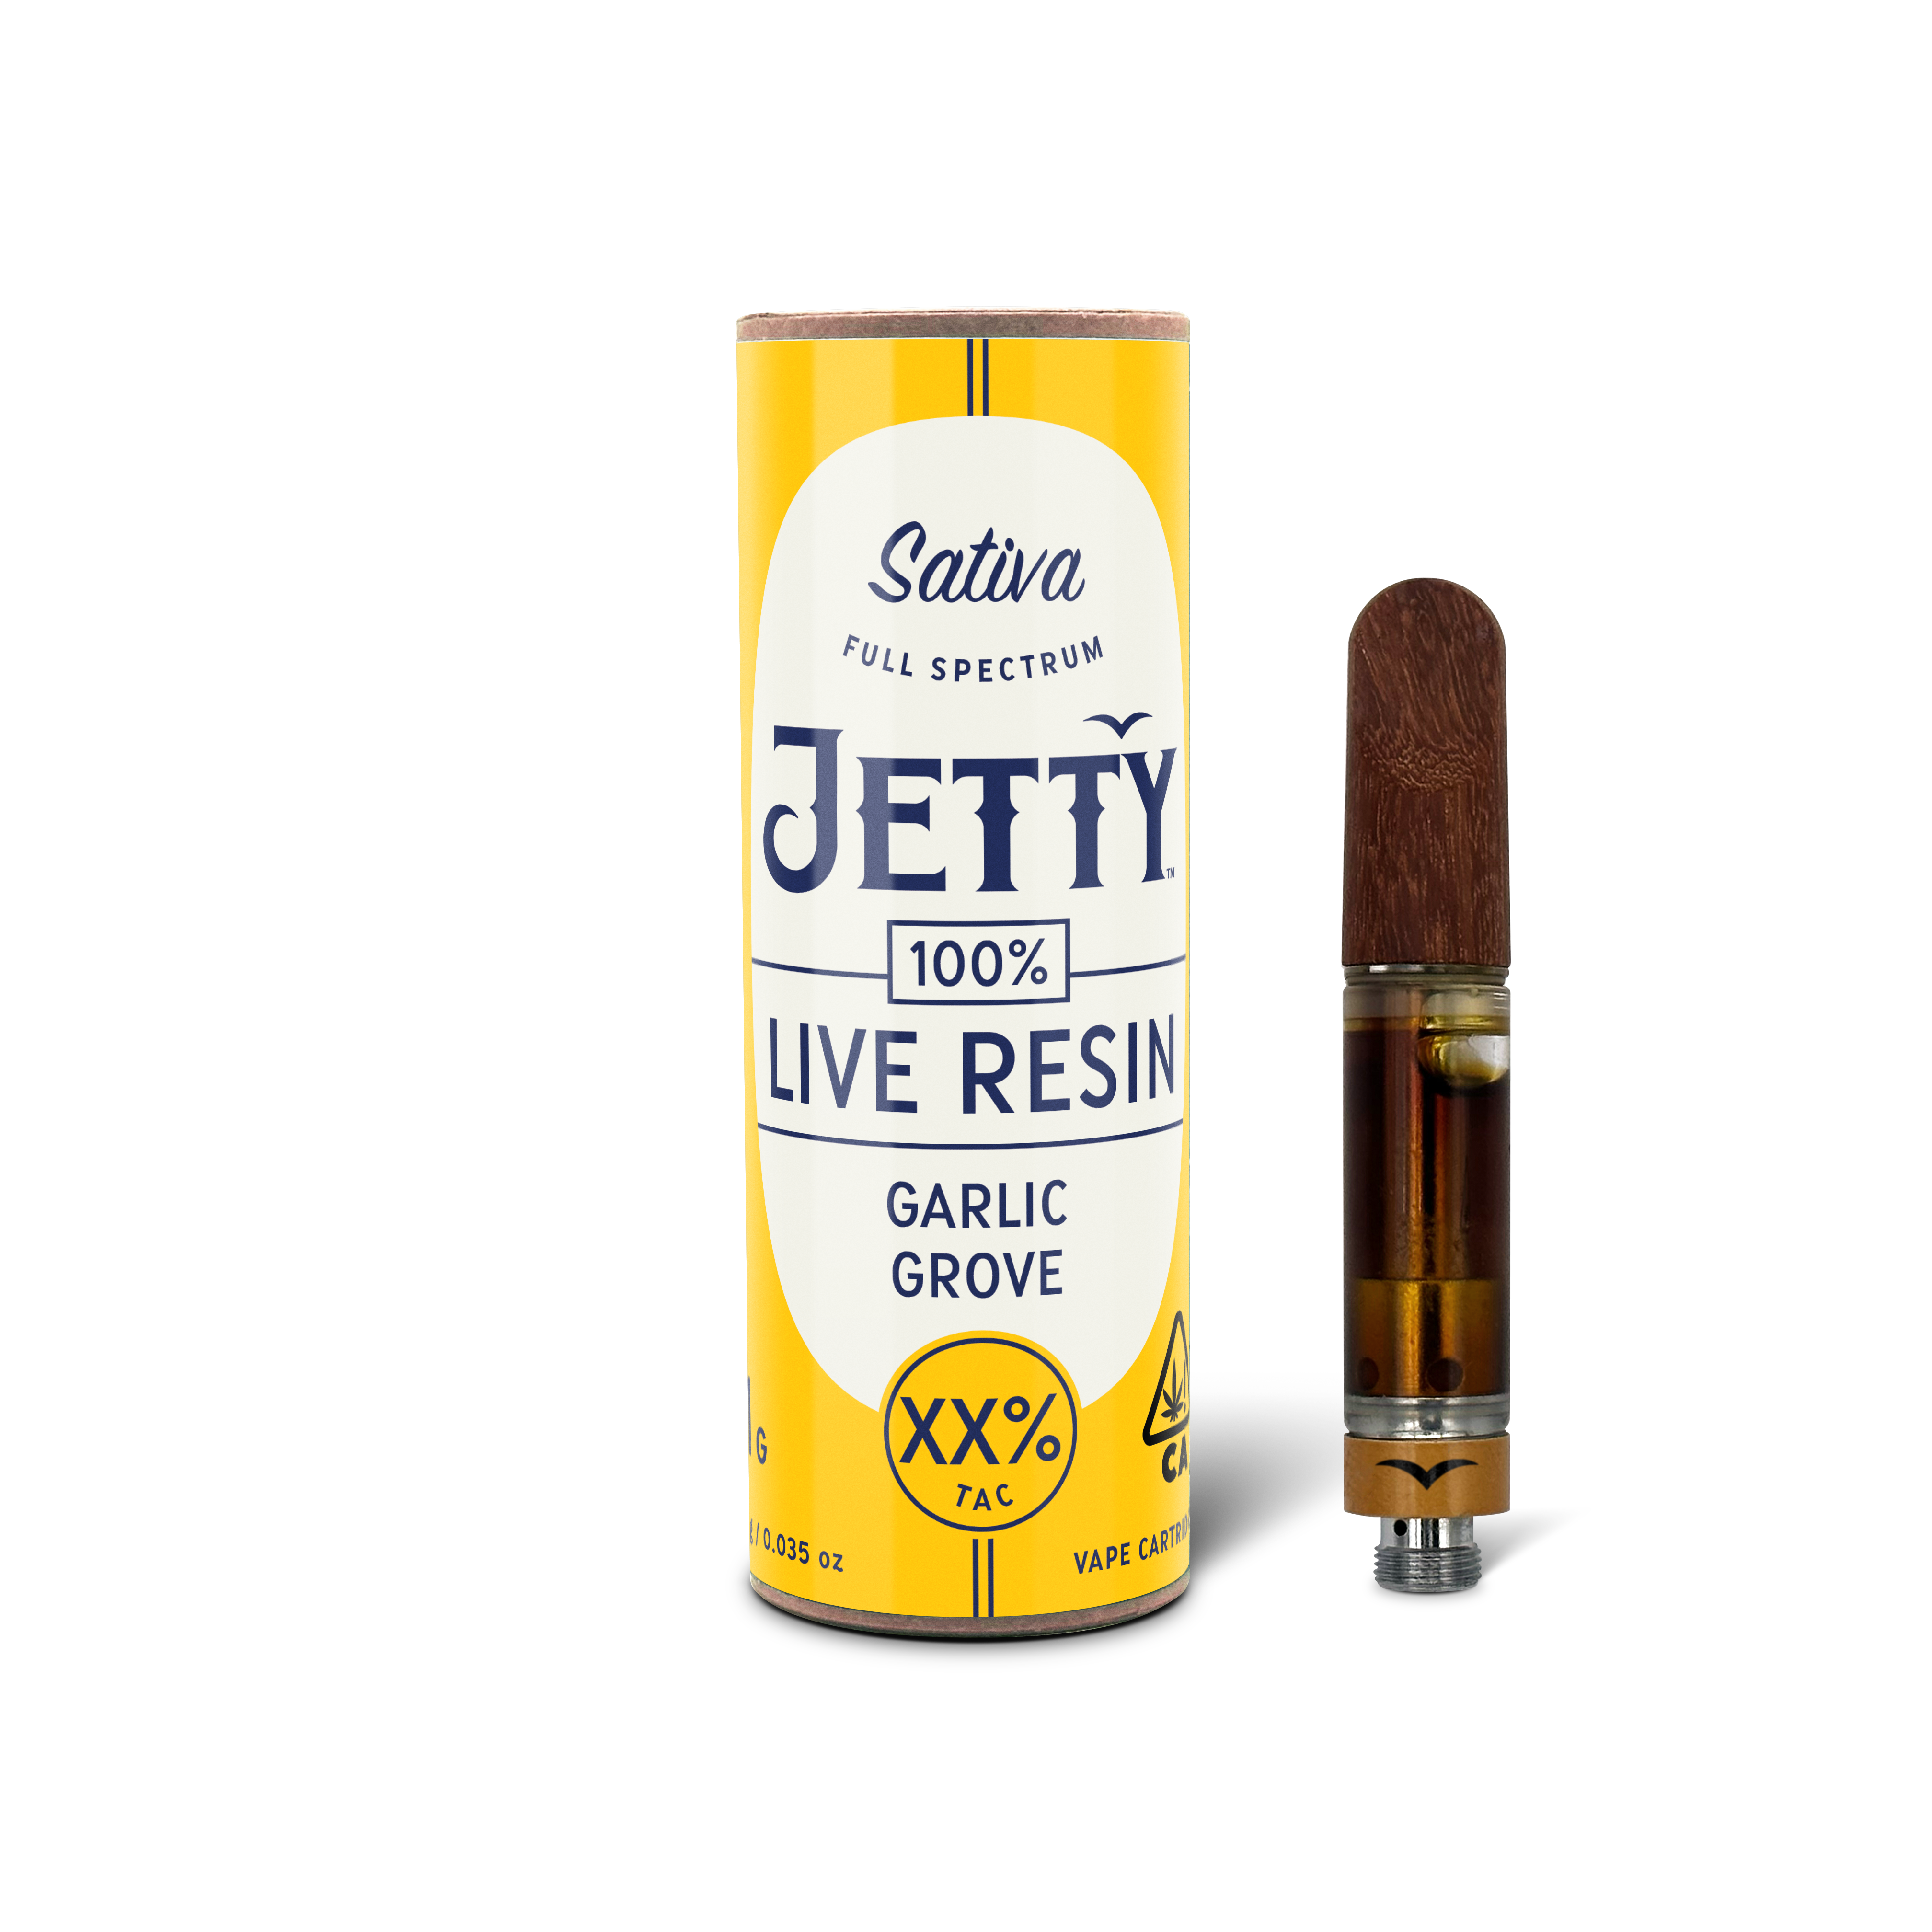 A photograph of Jetty Cartridge 1g Unrefined LR Garlic Grove